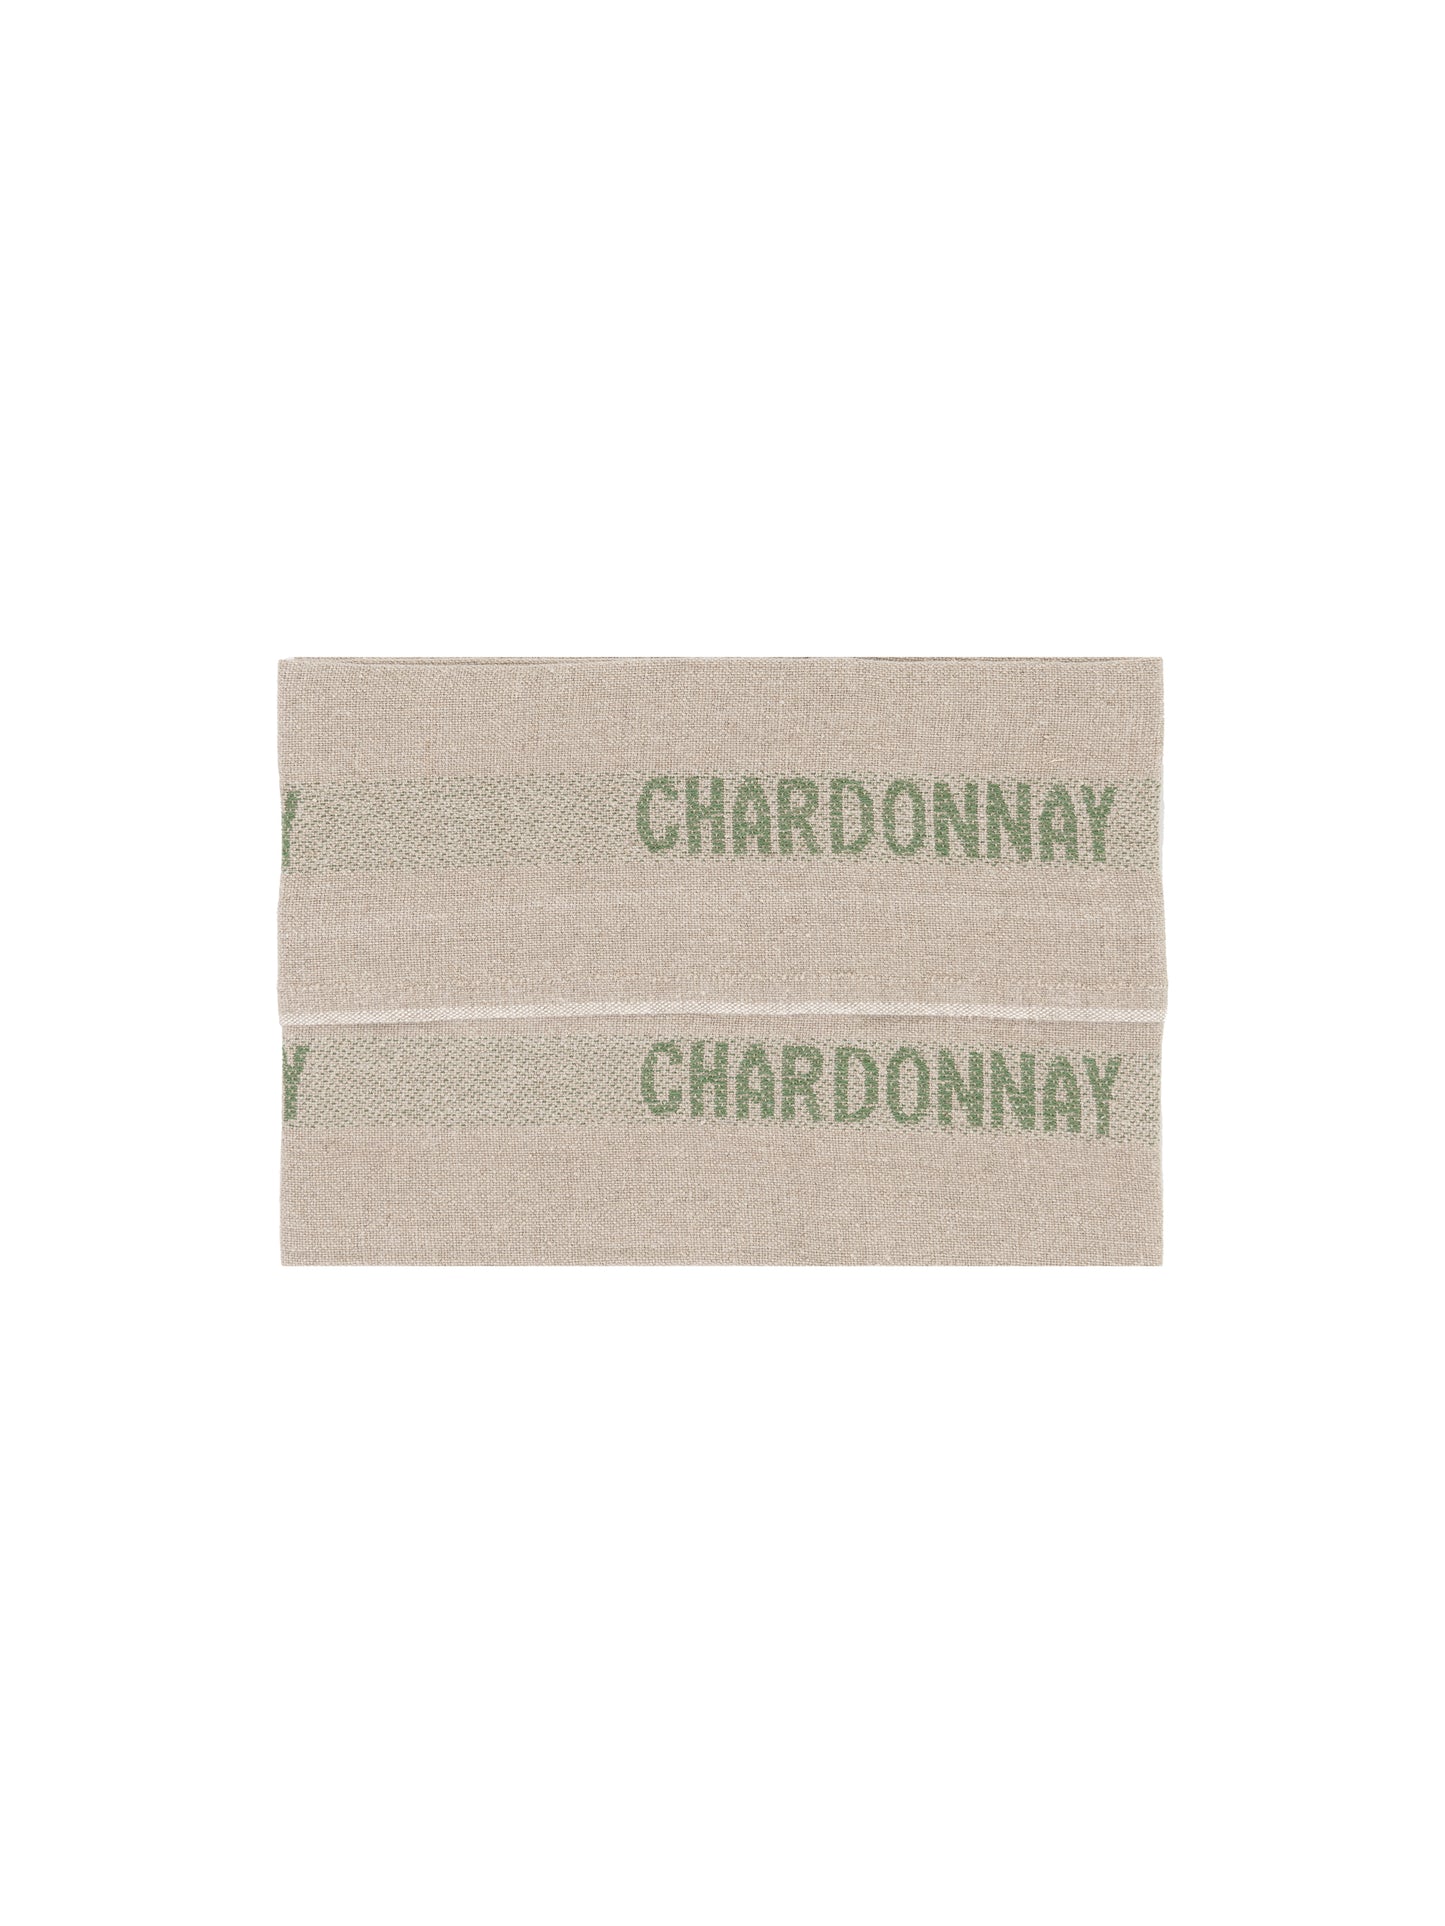 Chardonnay Linen Kitchen Towel Weston Table